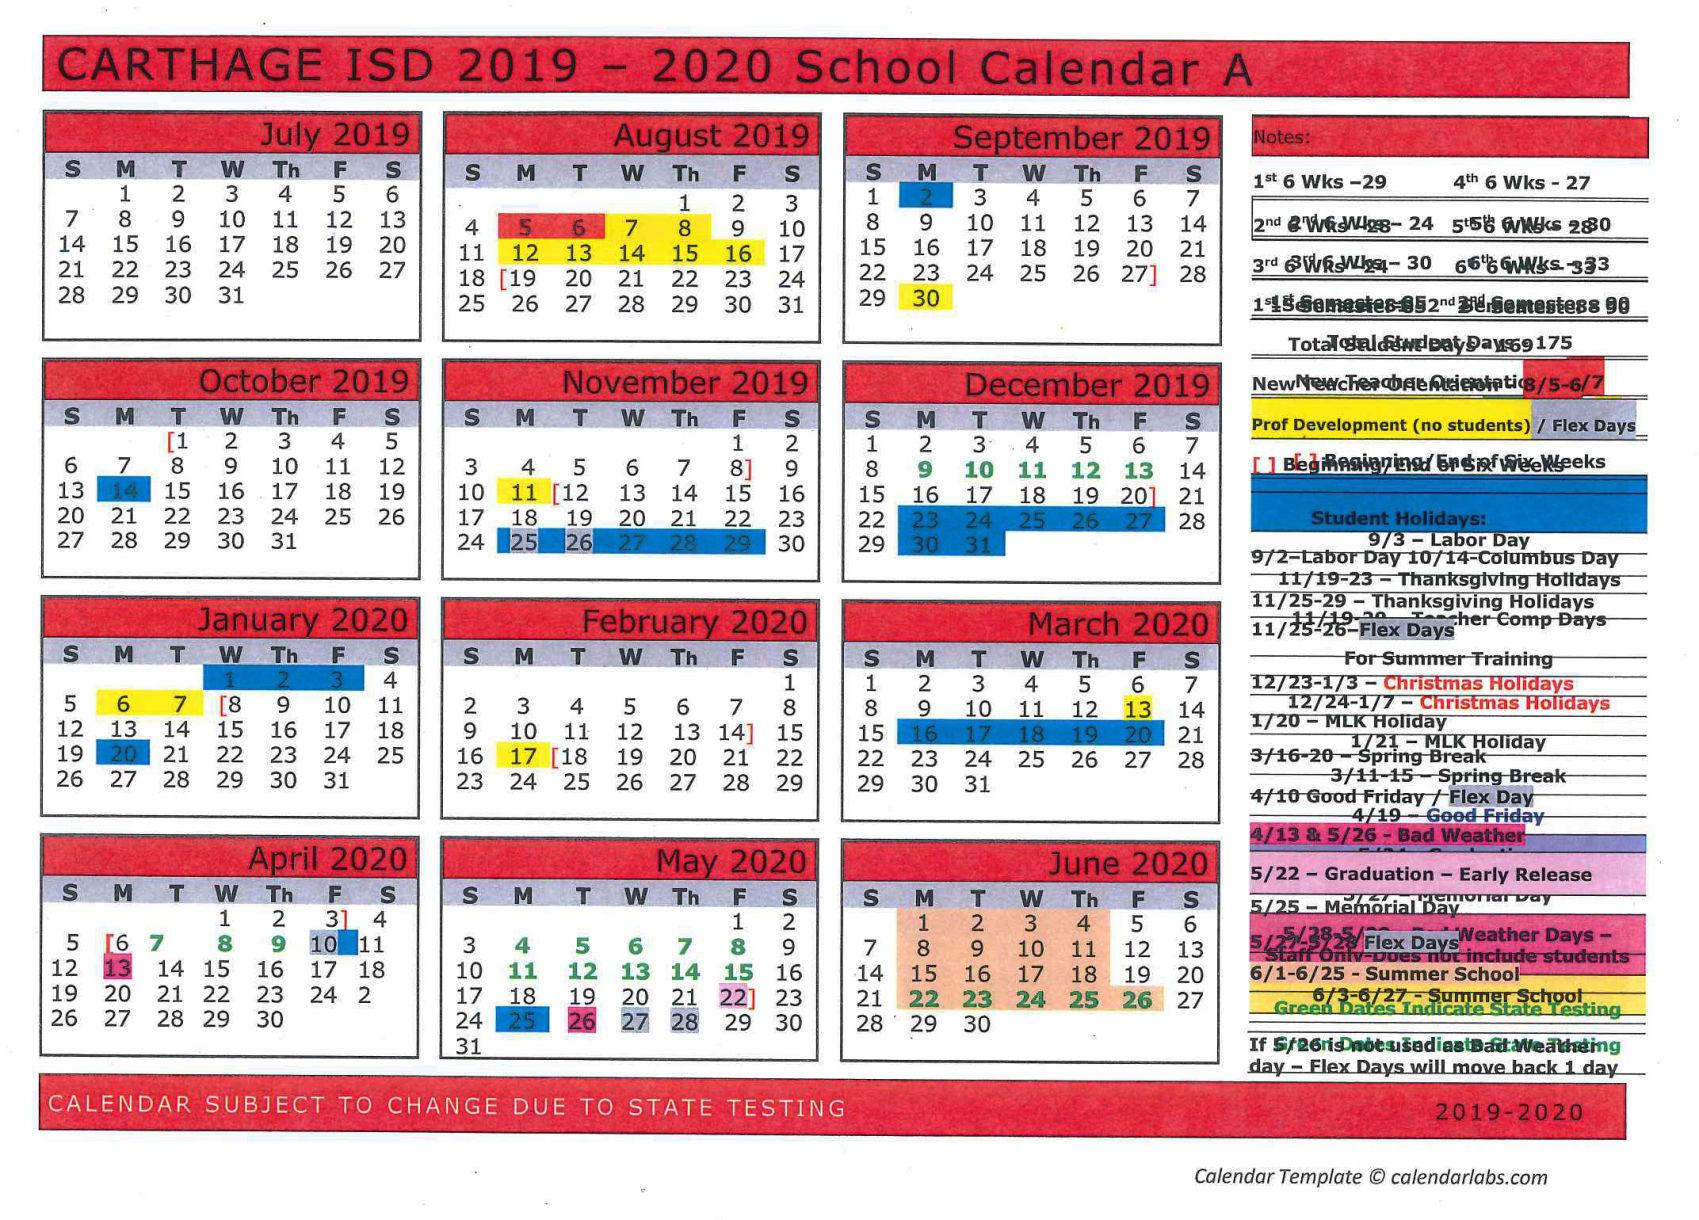 Carthage ISD adopts 20192020 school calendar News